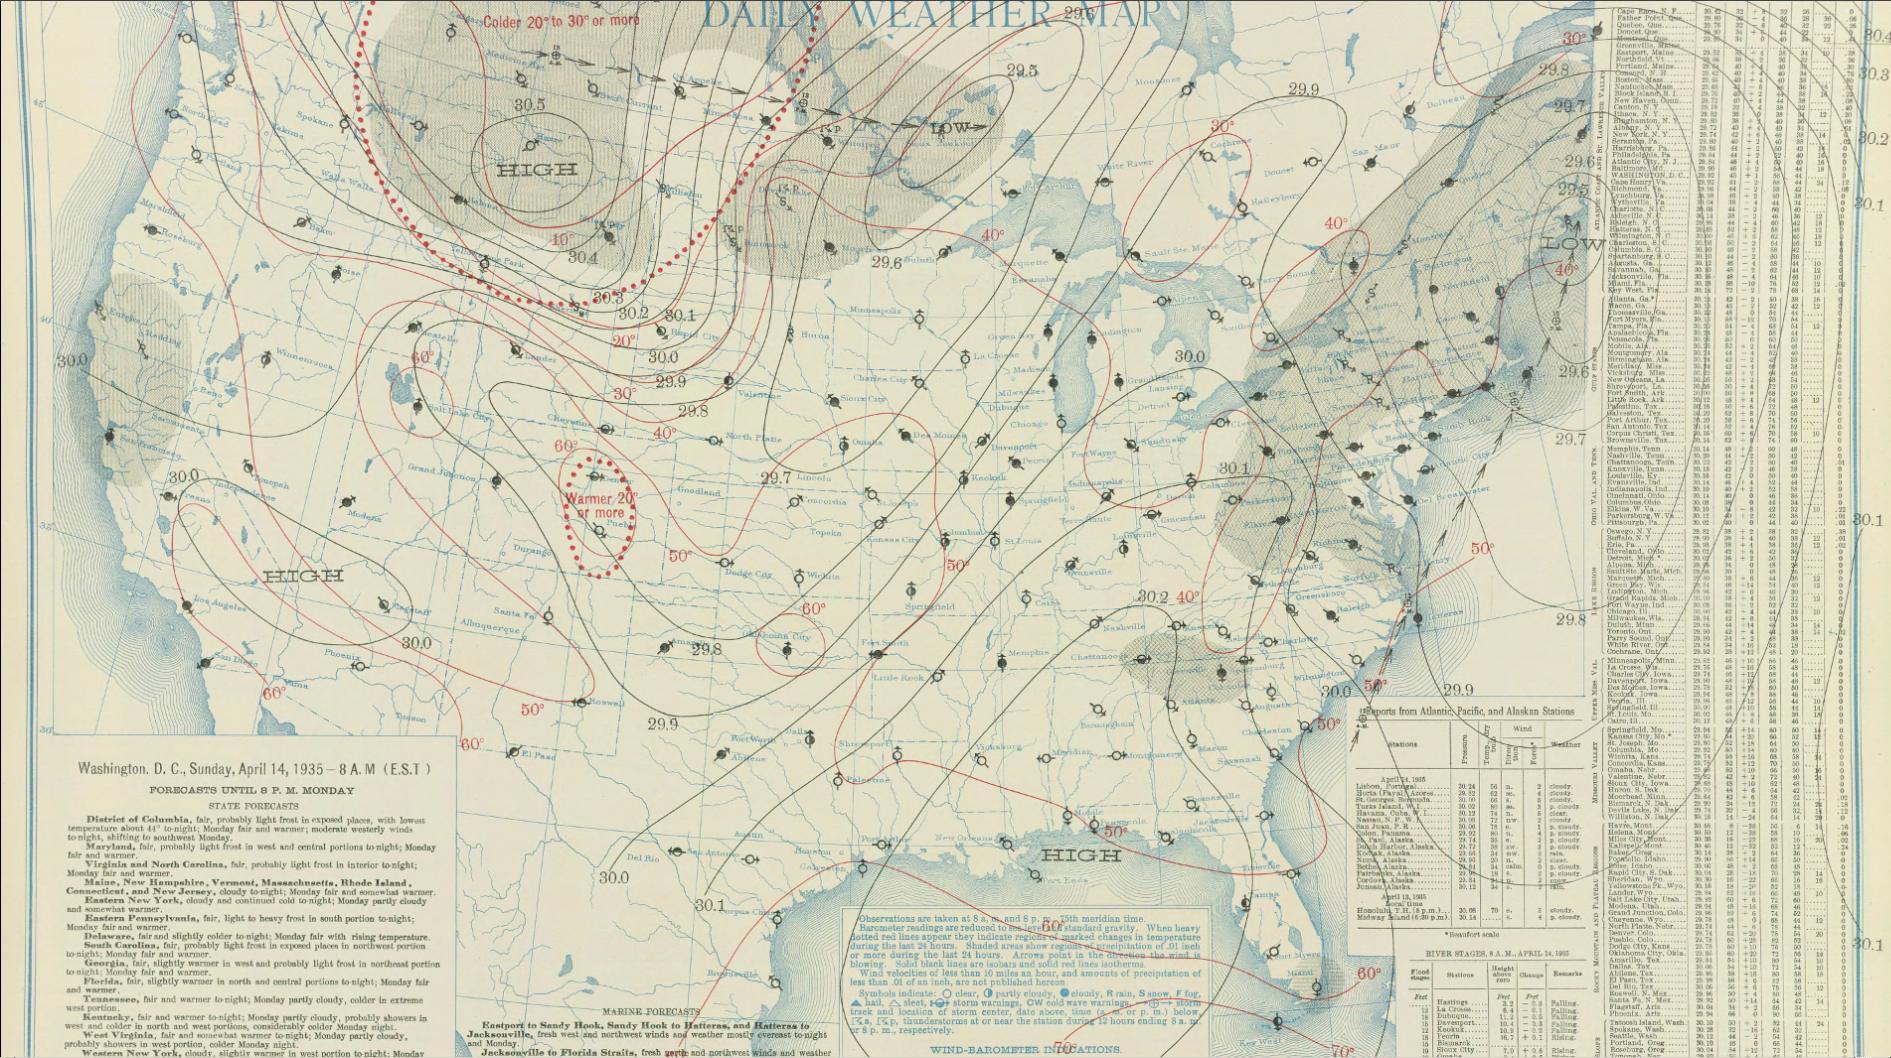 7:00 am CST April 14, 1935 U.S. Weather Burea Surface Analysis